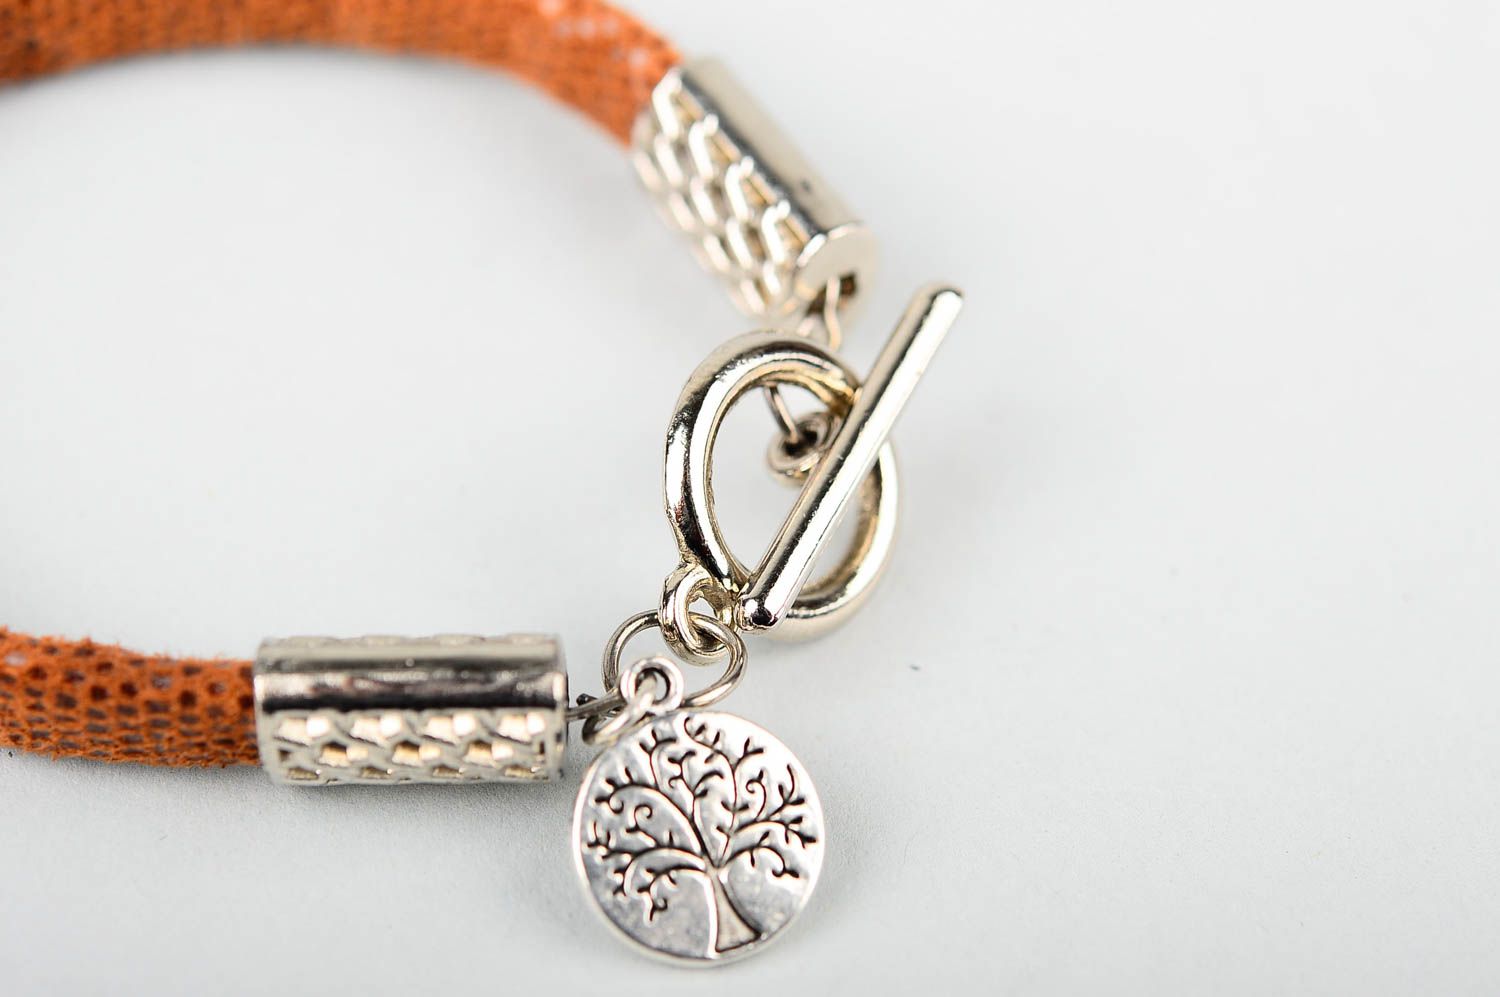 Womens handmade leather bracelet wrist bracelet designs leather goods gift ideas photo 5